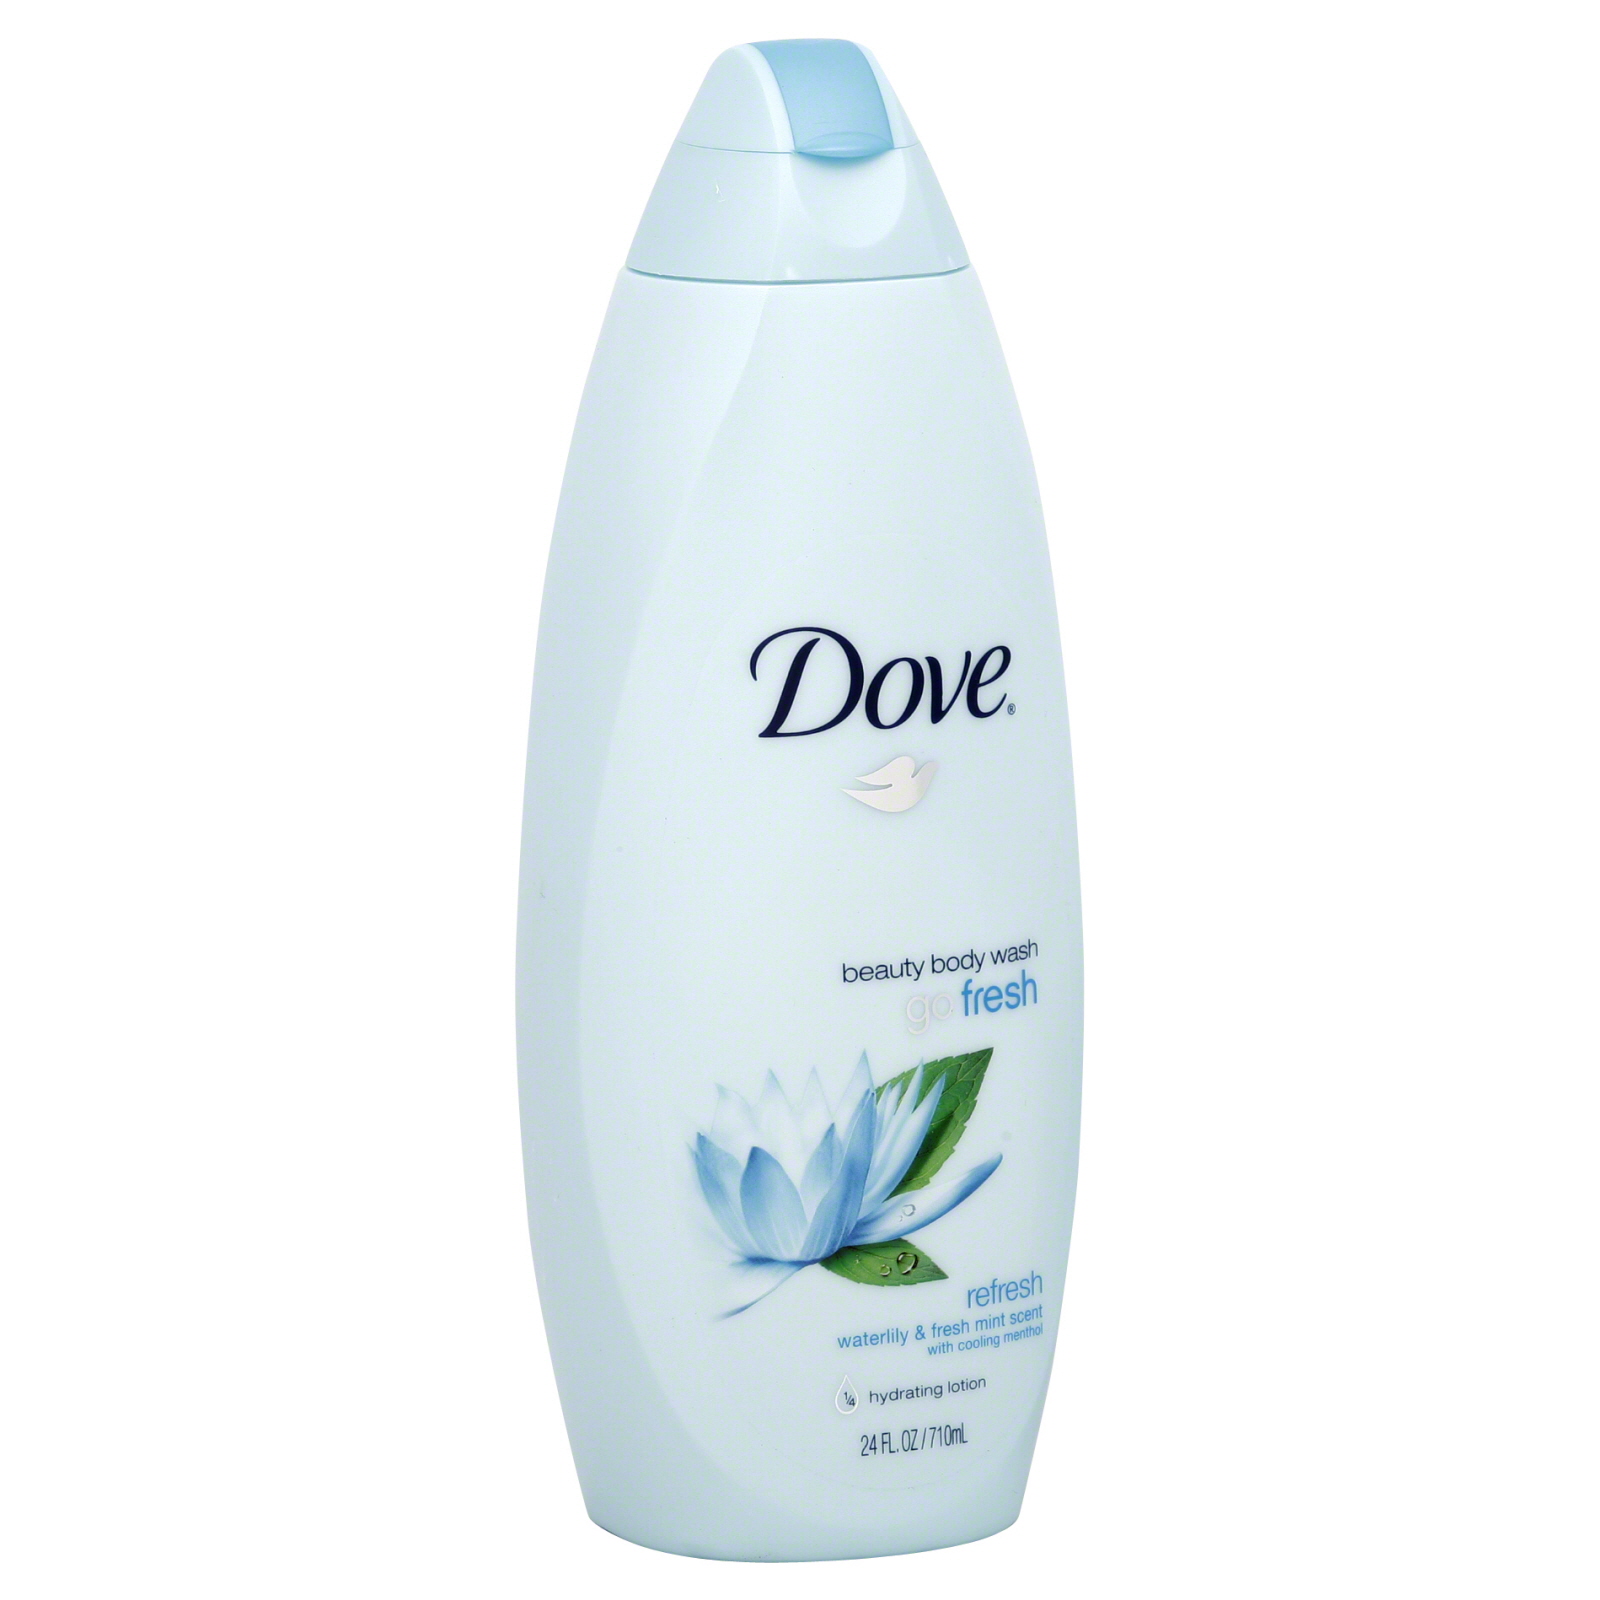 Dove Go Fresh Refresh Body Wash, Beauty, Waterlily & Fresh Mint Scent, 24 fl oz (710 ml)